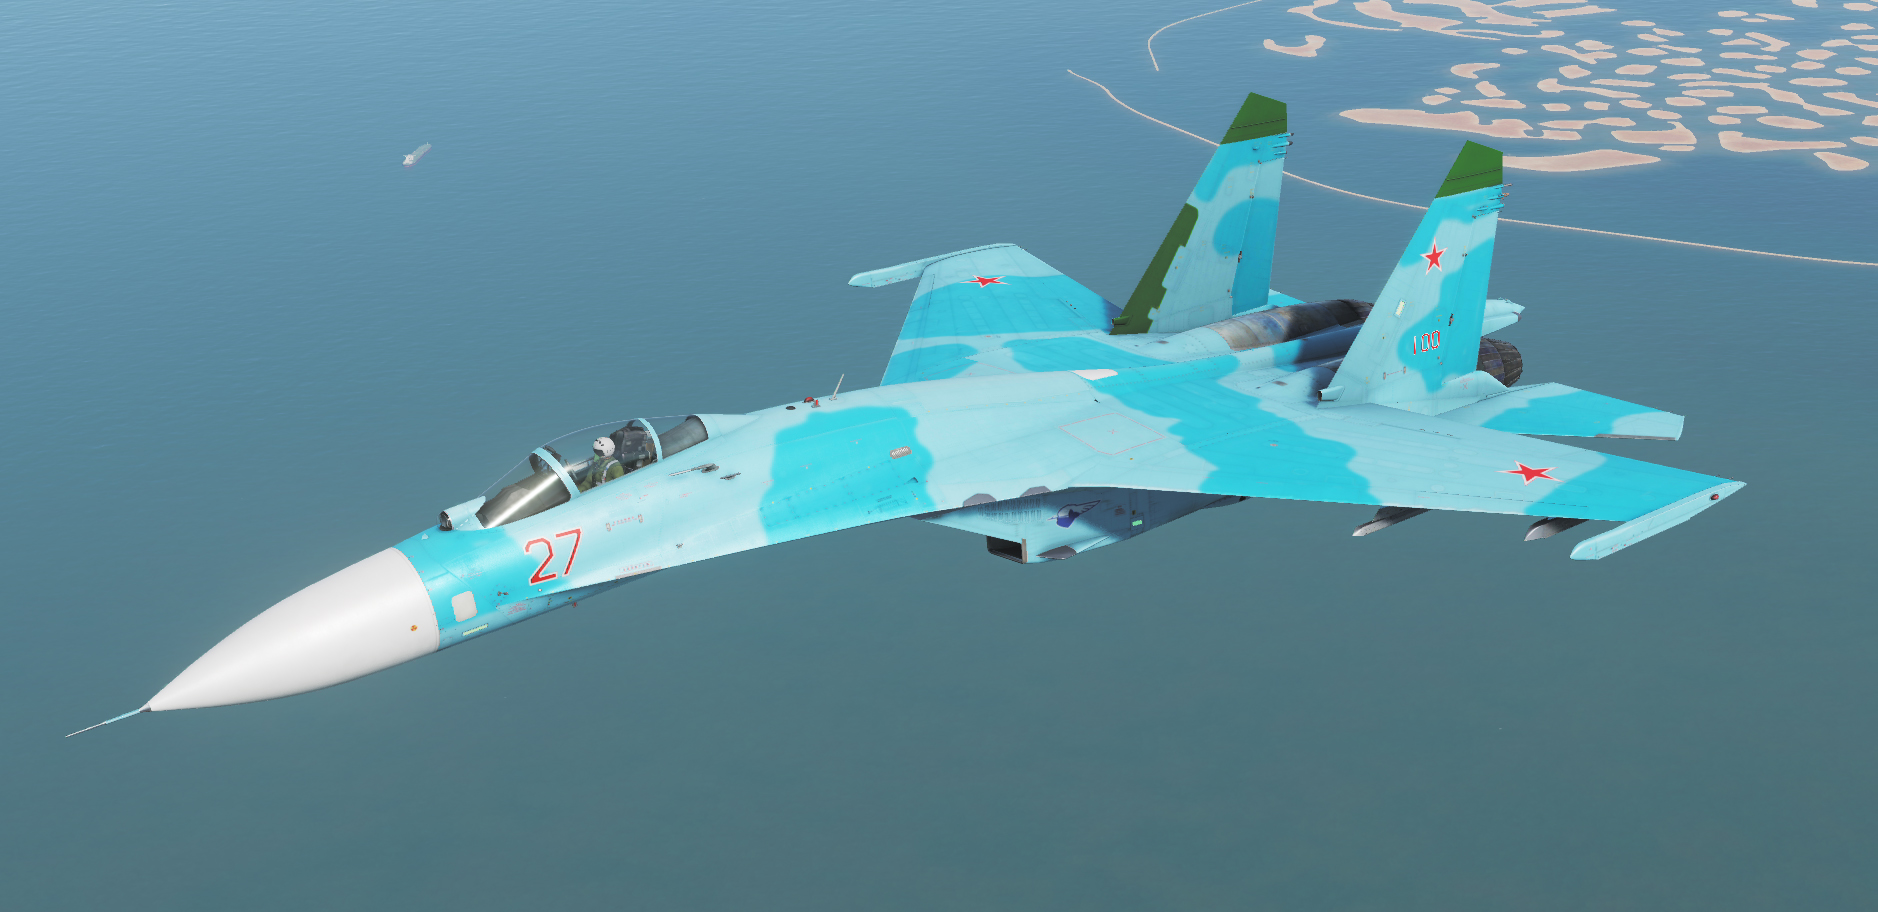 Su-27 for DCS World